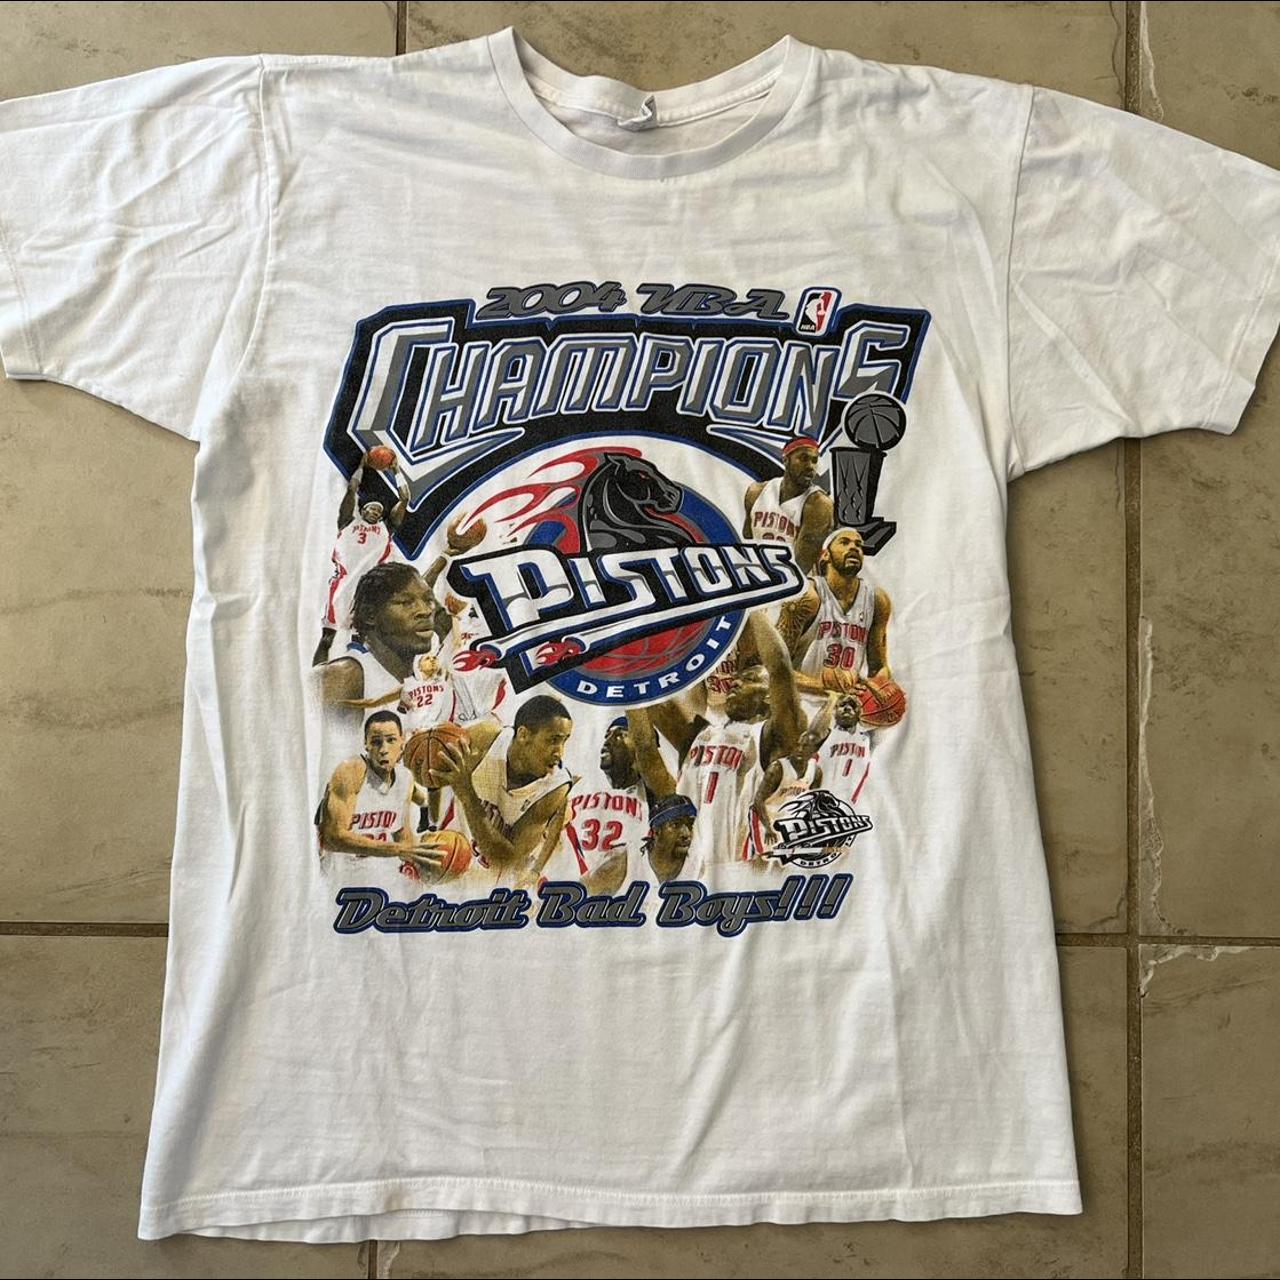 2004 Detroit Pistons NBA Champions Shirt - Depop